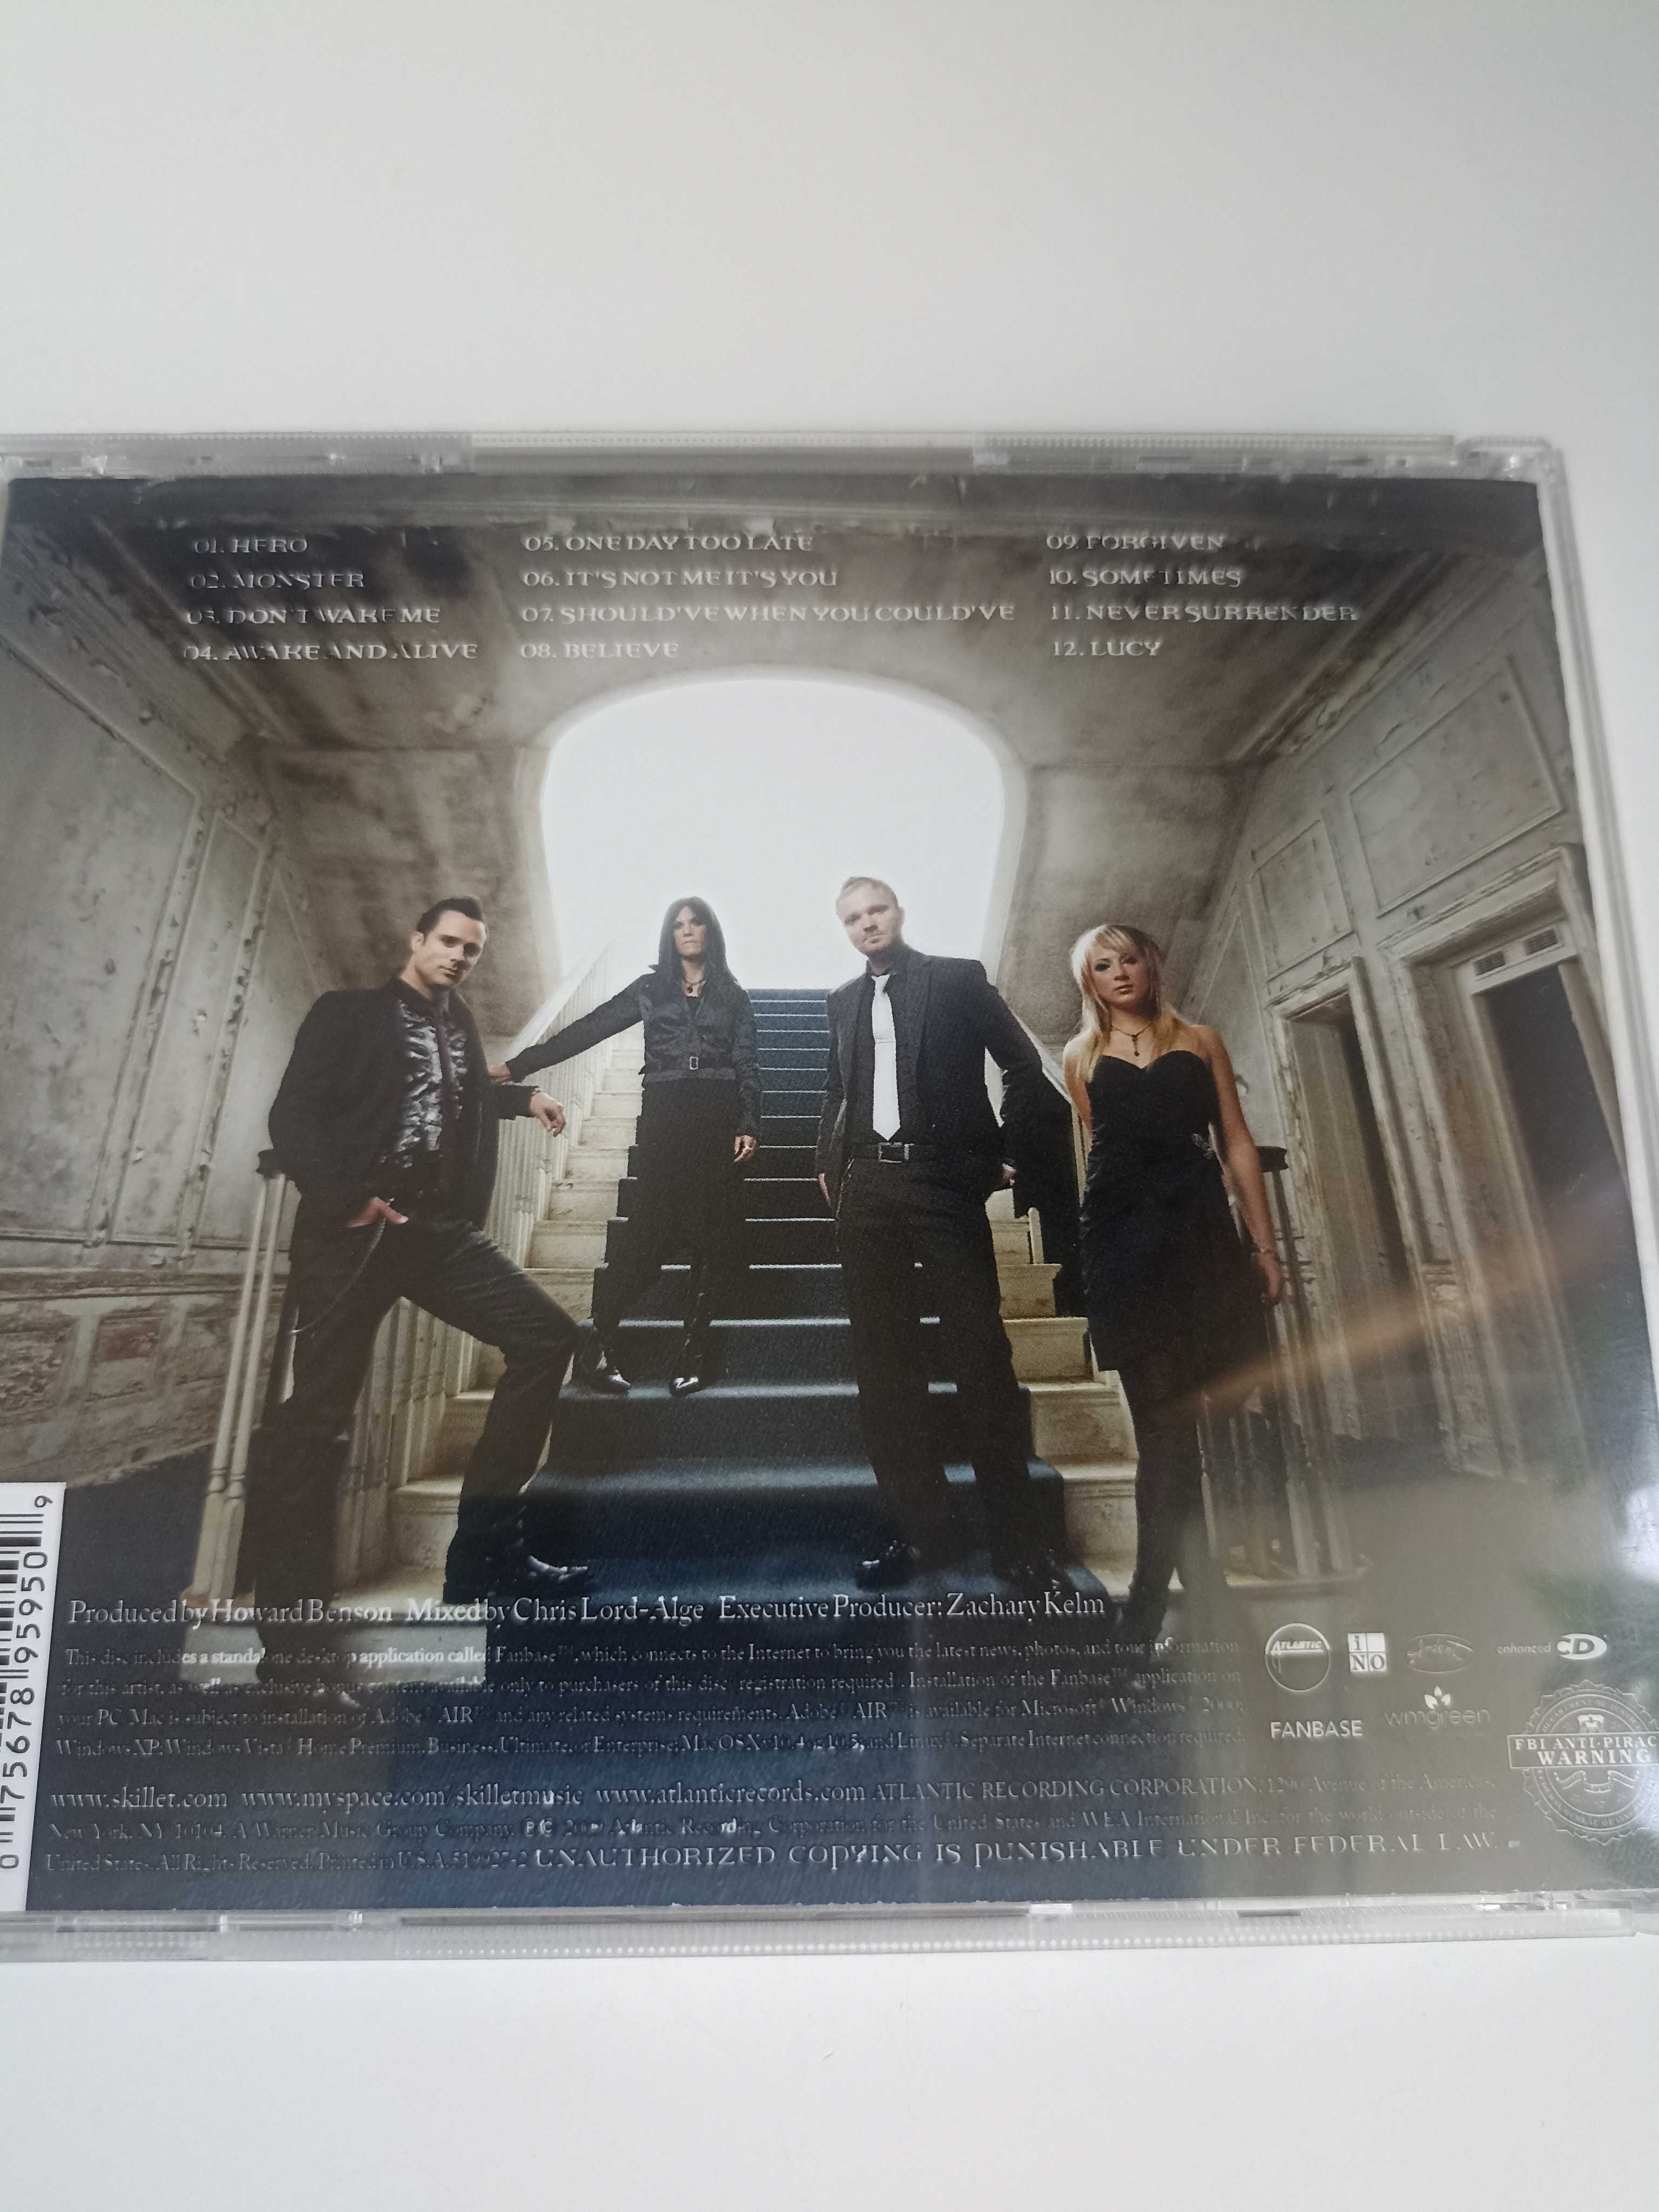 Płyta CD Skillet "Awake"